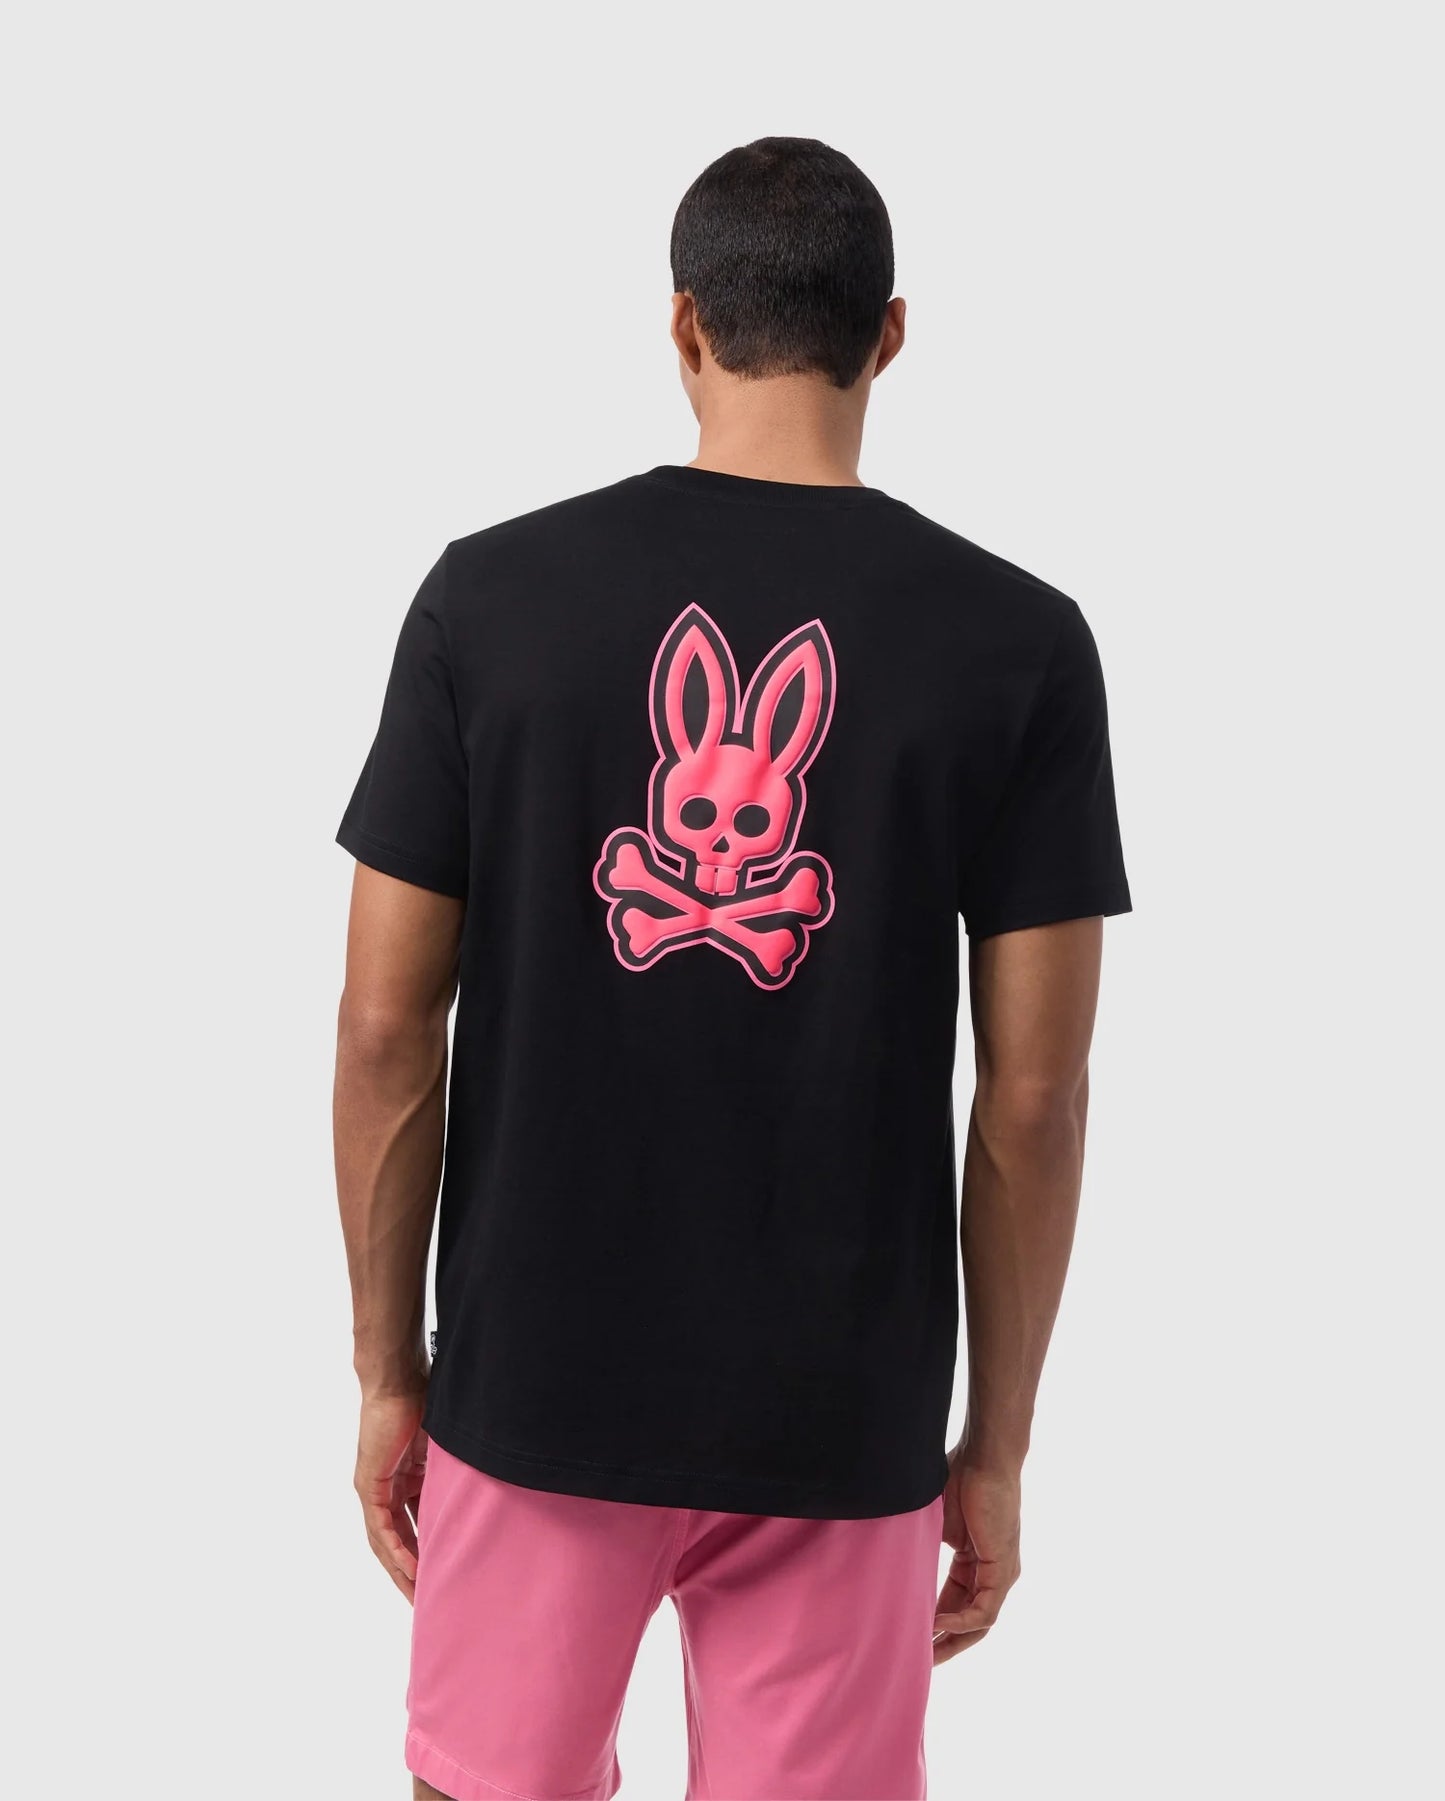 Psycho Bunny Men's Sloan Back Graphic Tee